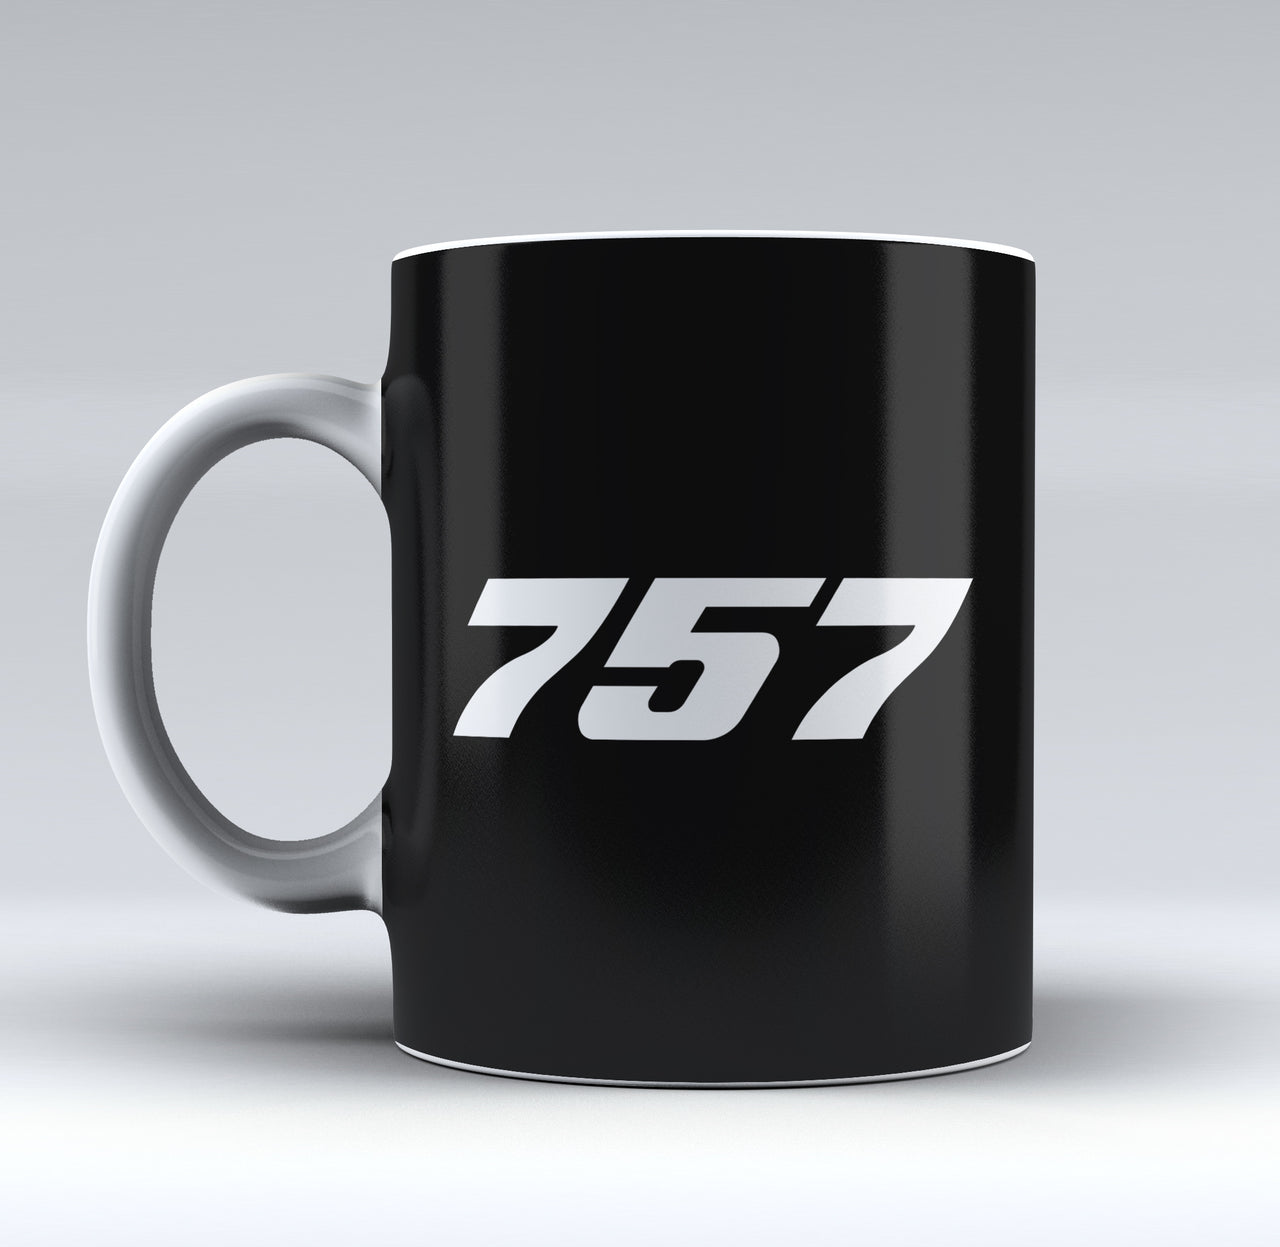 757 Flat Text Designed Mugs